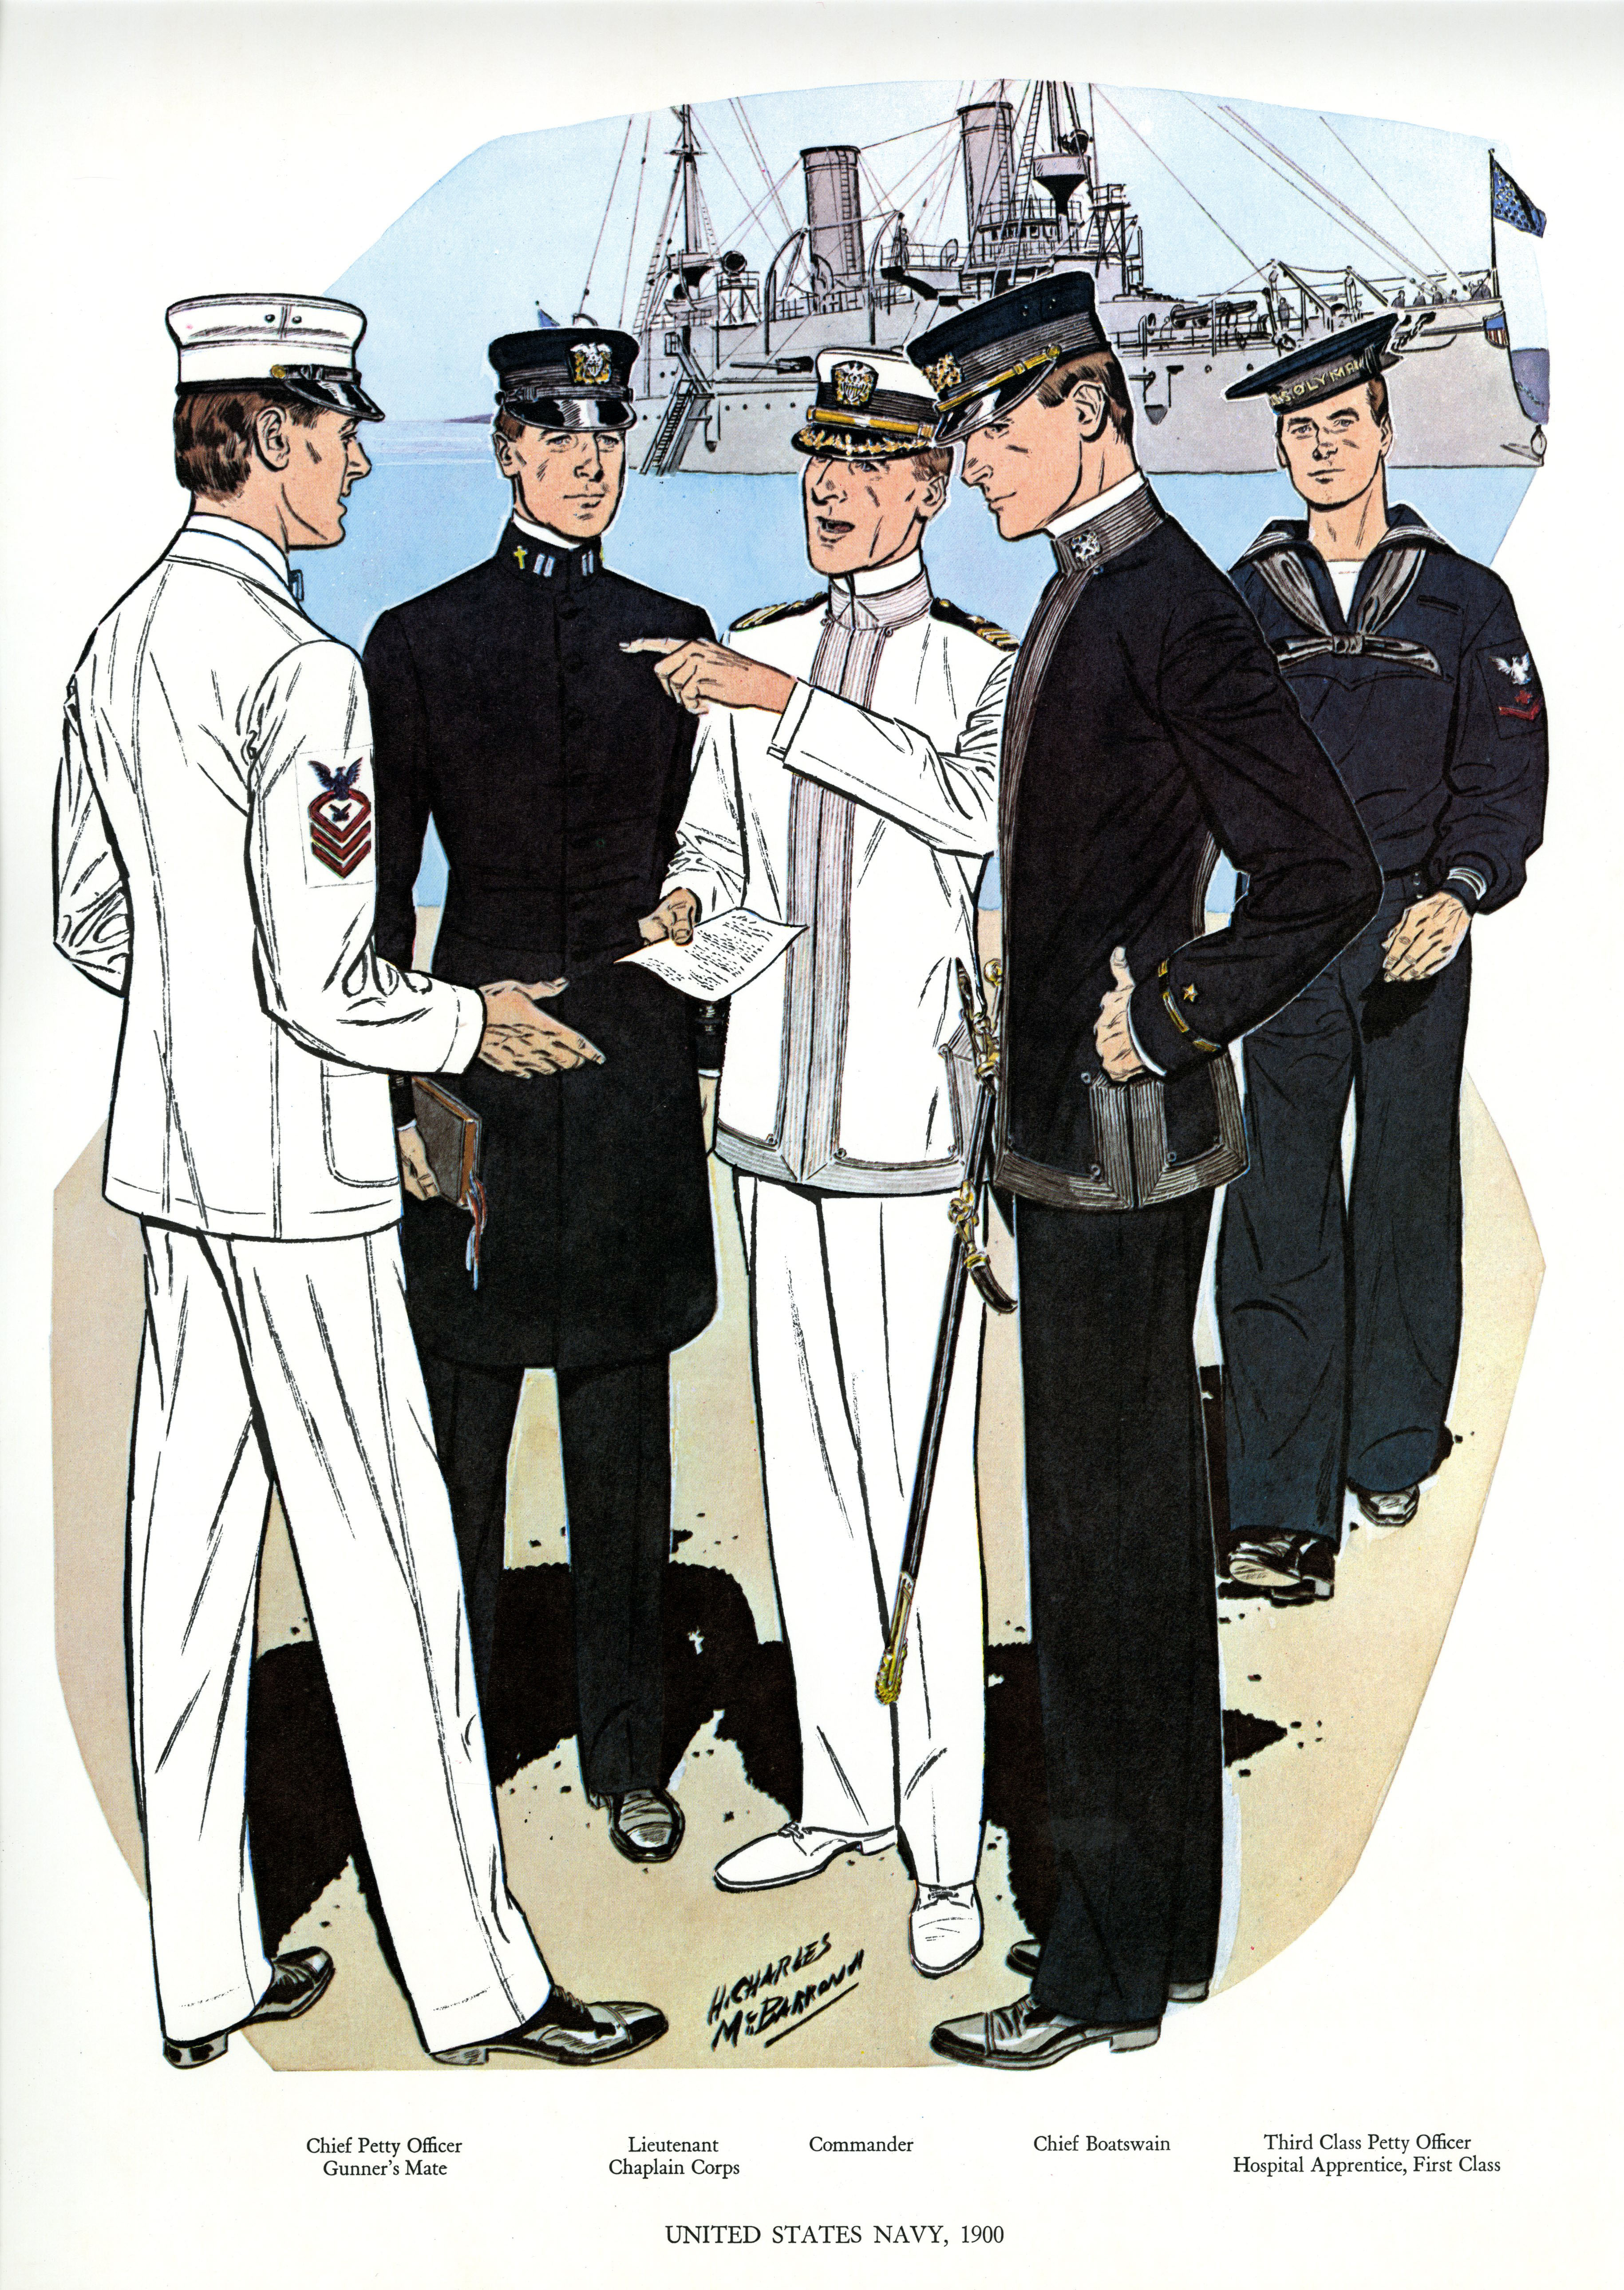 Uniforms, History